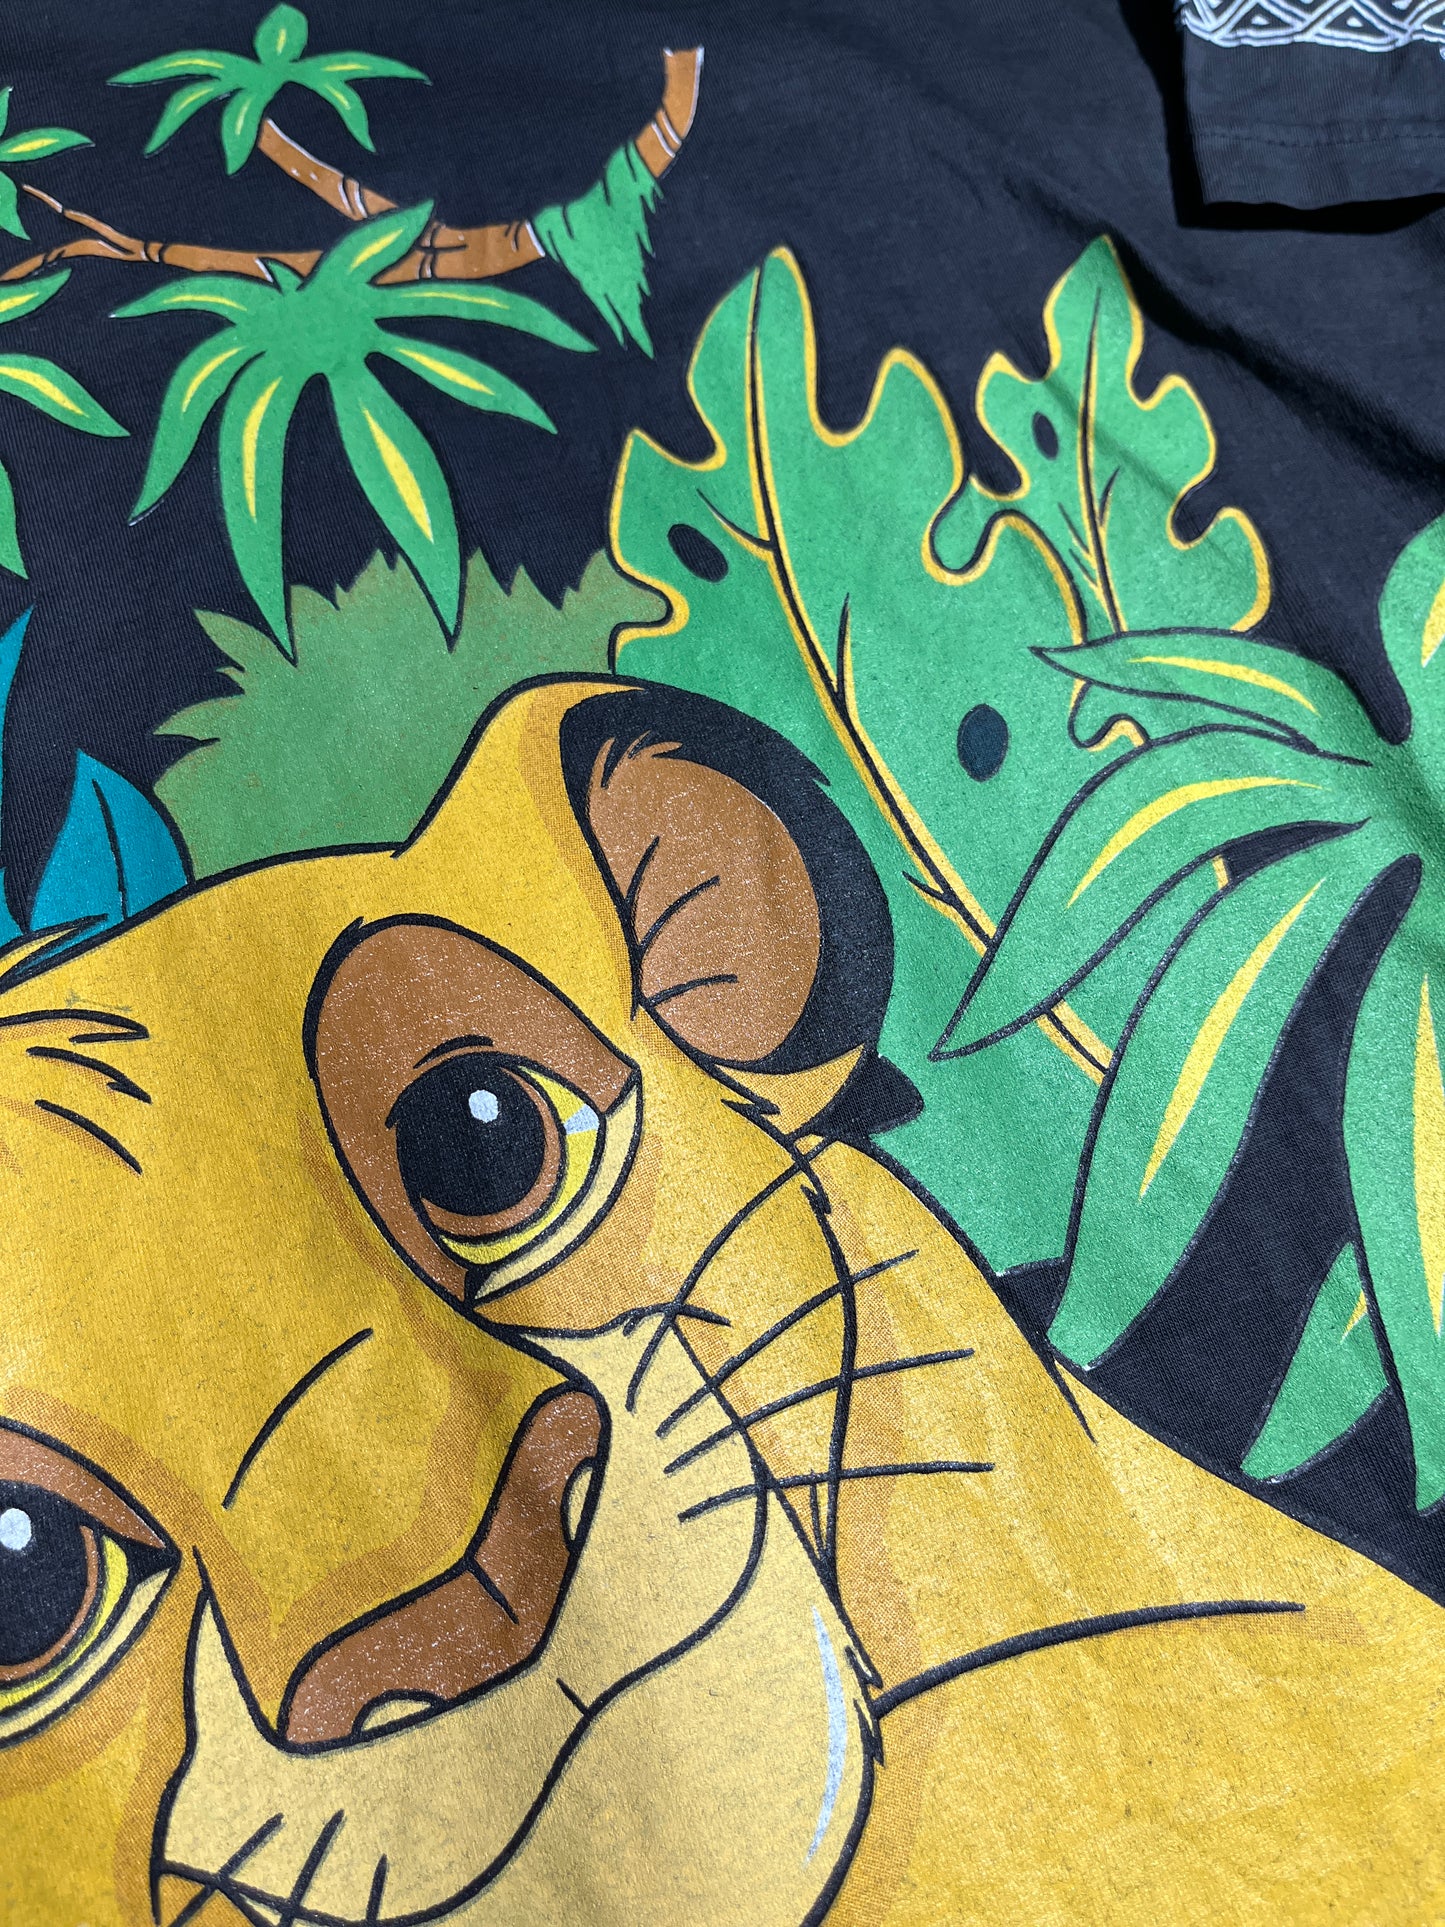 Vintage The Lion King Shirt Nightie LONG Disney